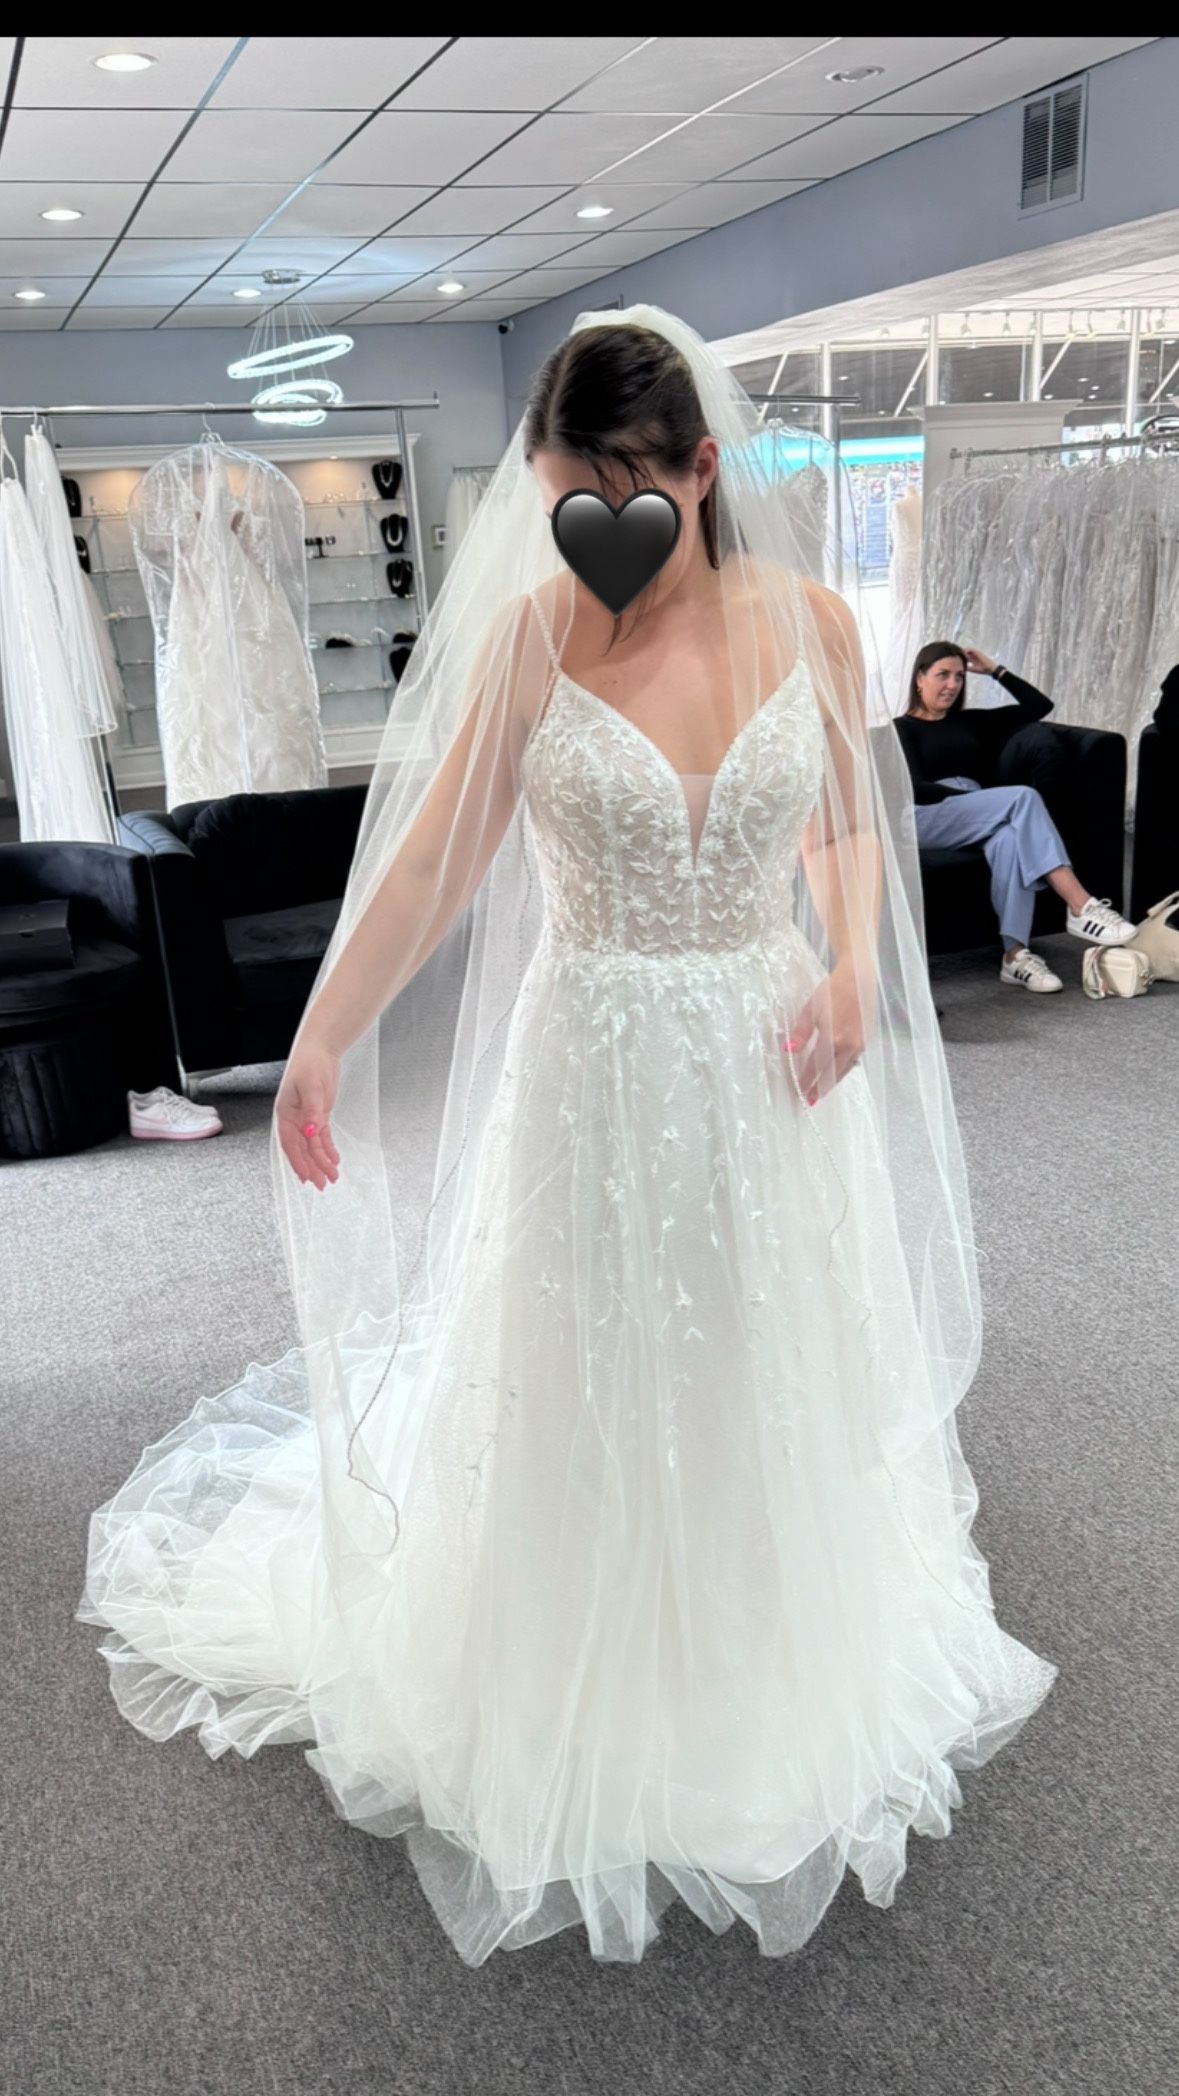 Stunning White Glitter Wedding Dress - Never Altered - WITH VEIL